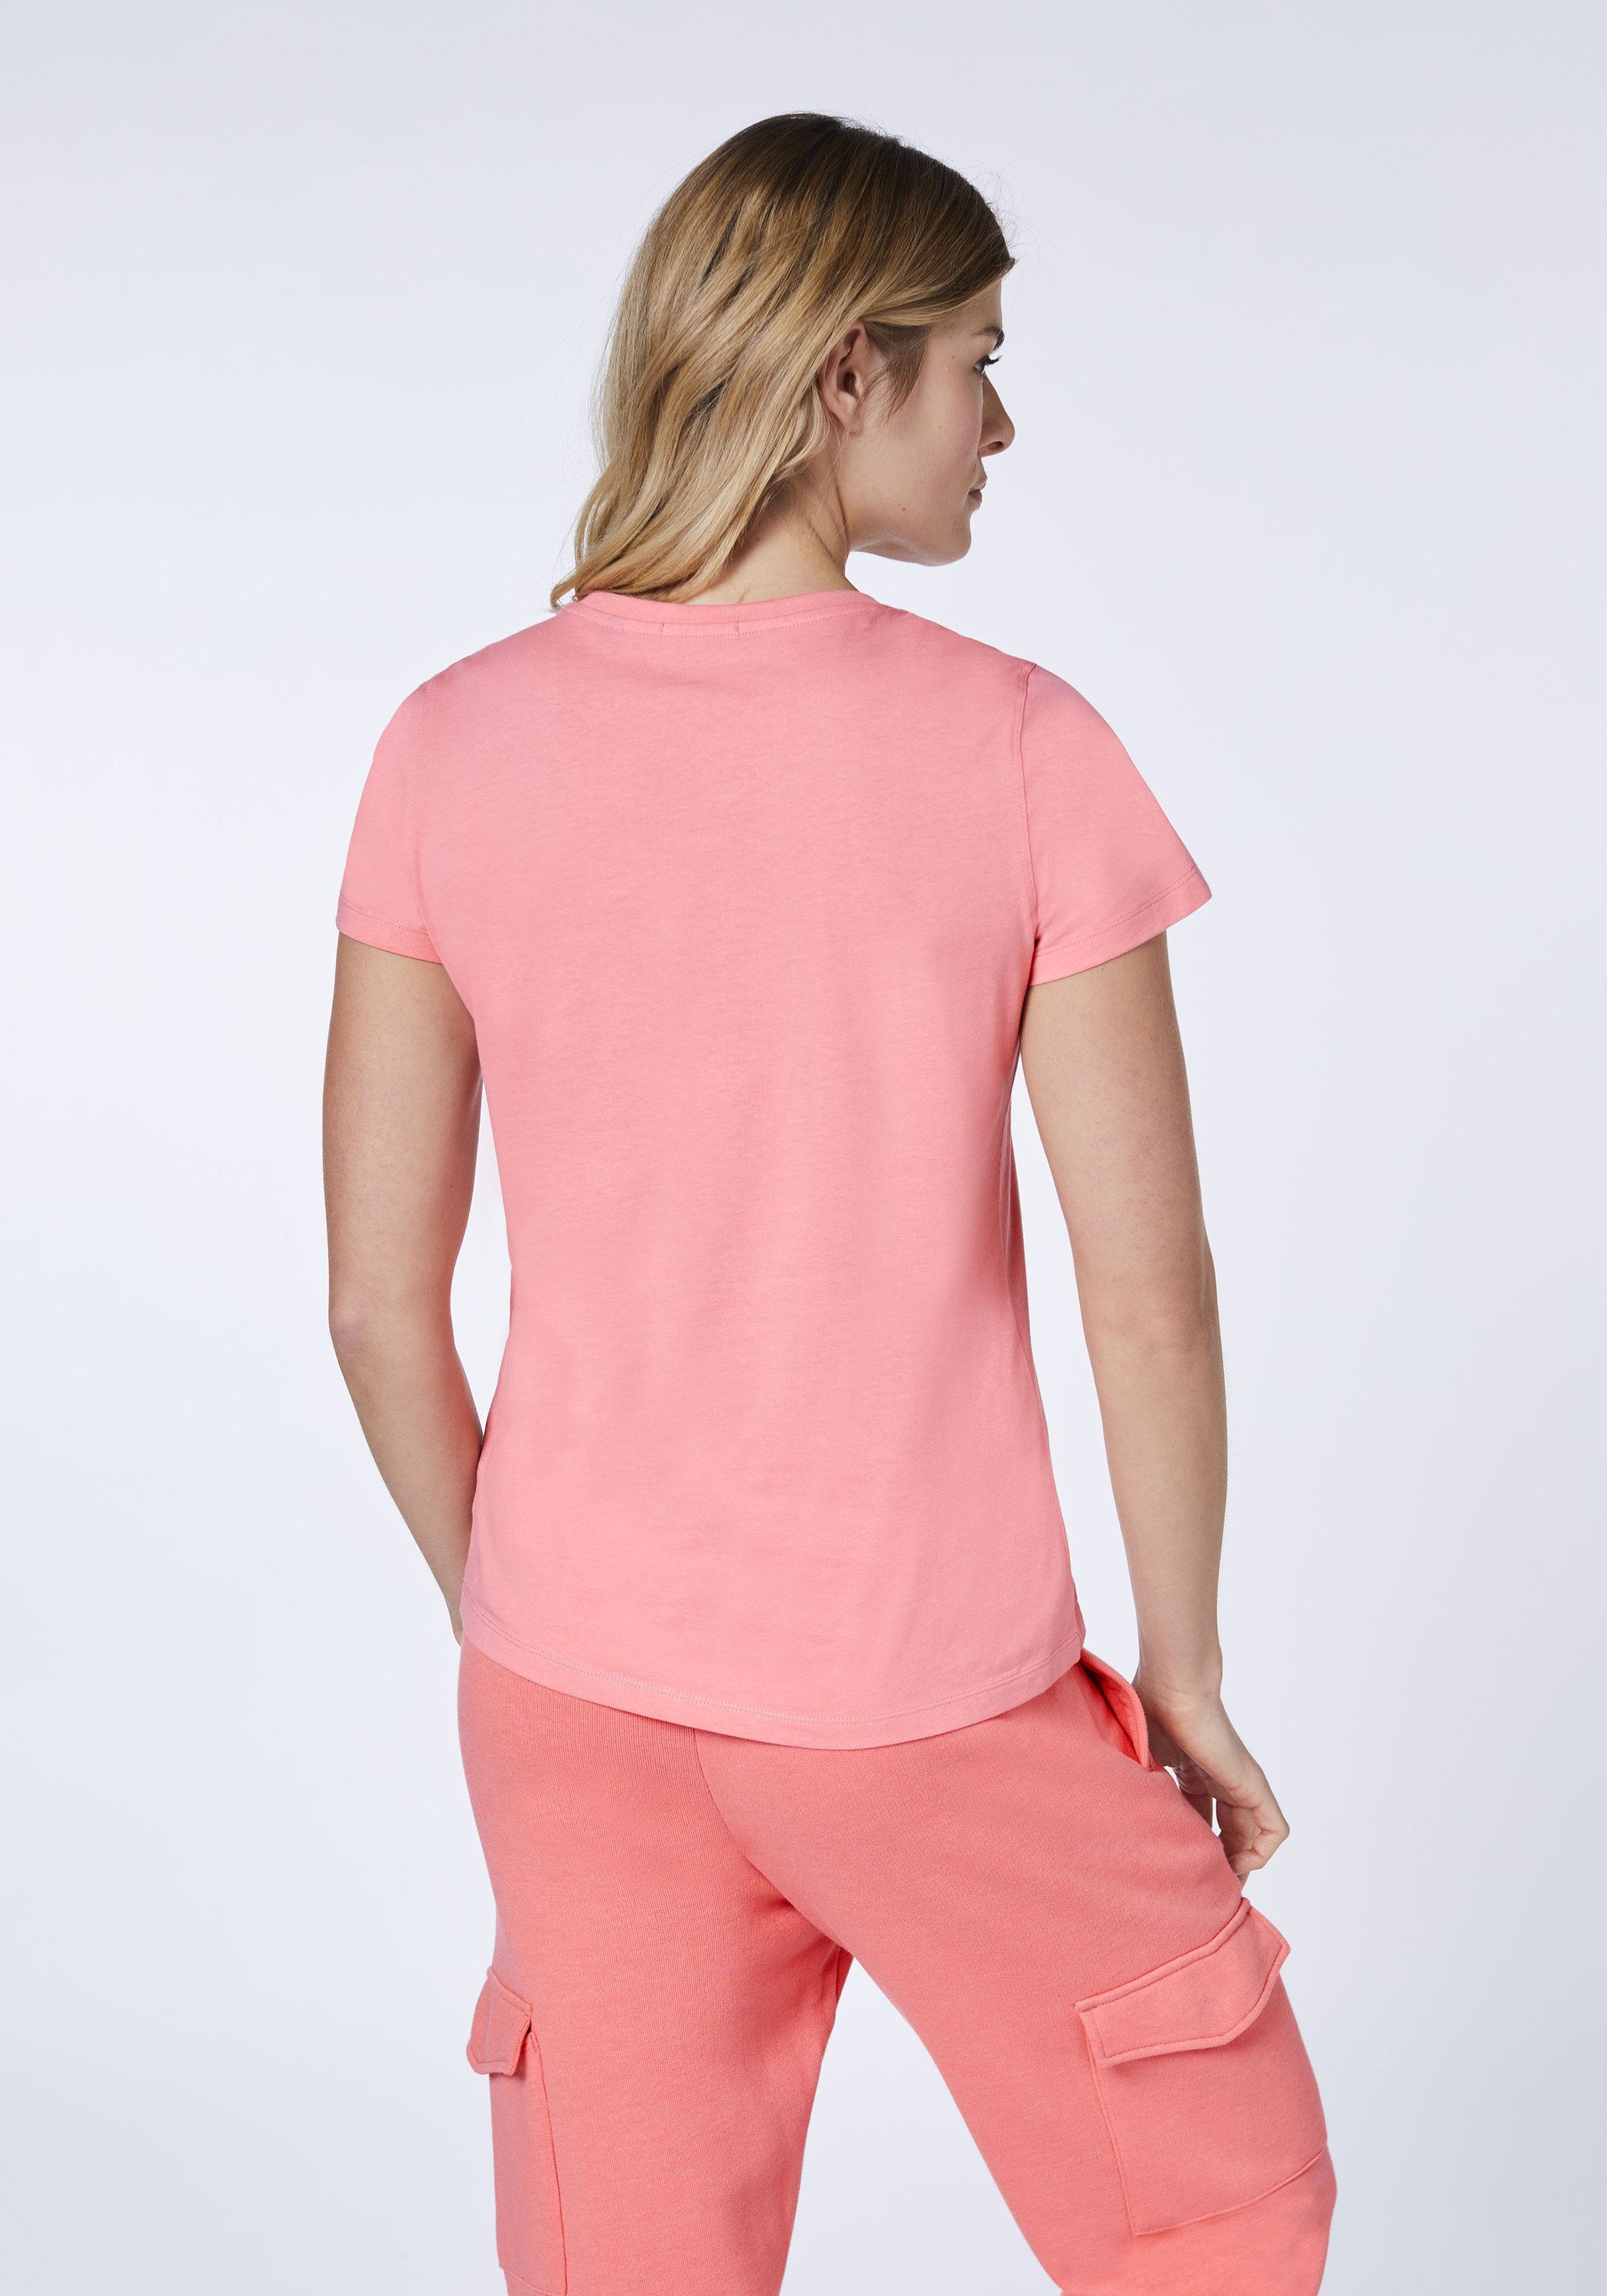 Print-Shirt Salmon Chiemsee mit Rose Jumper-Frontprint 1 T-Shirt